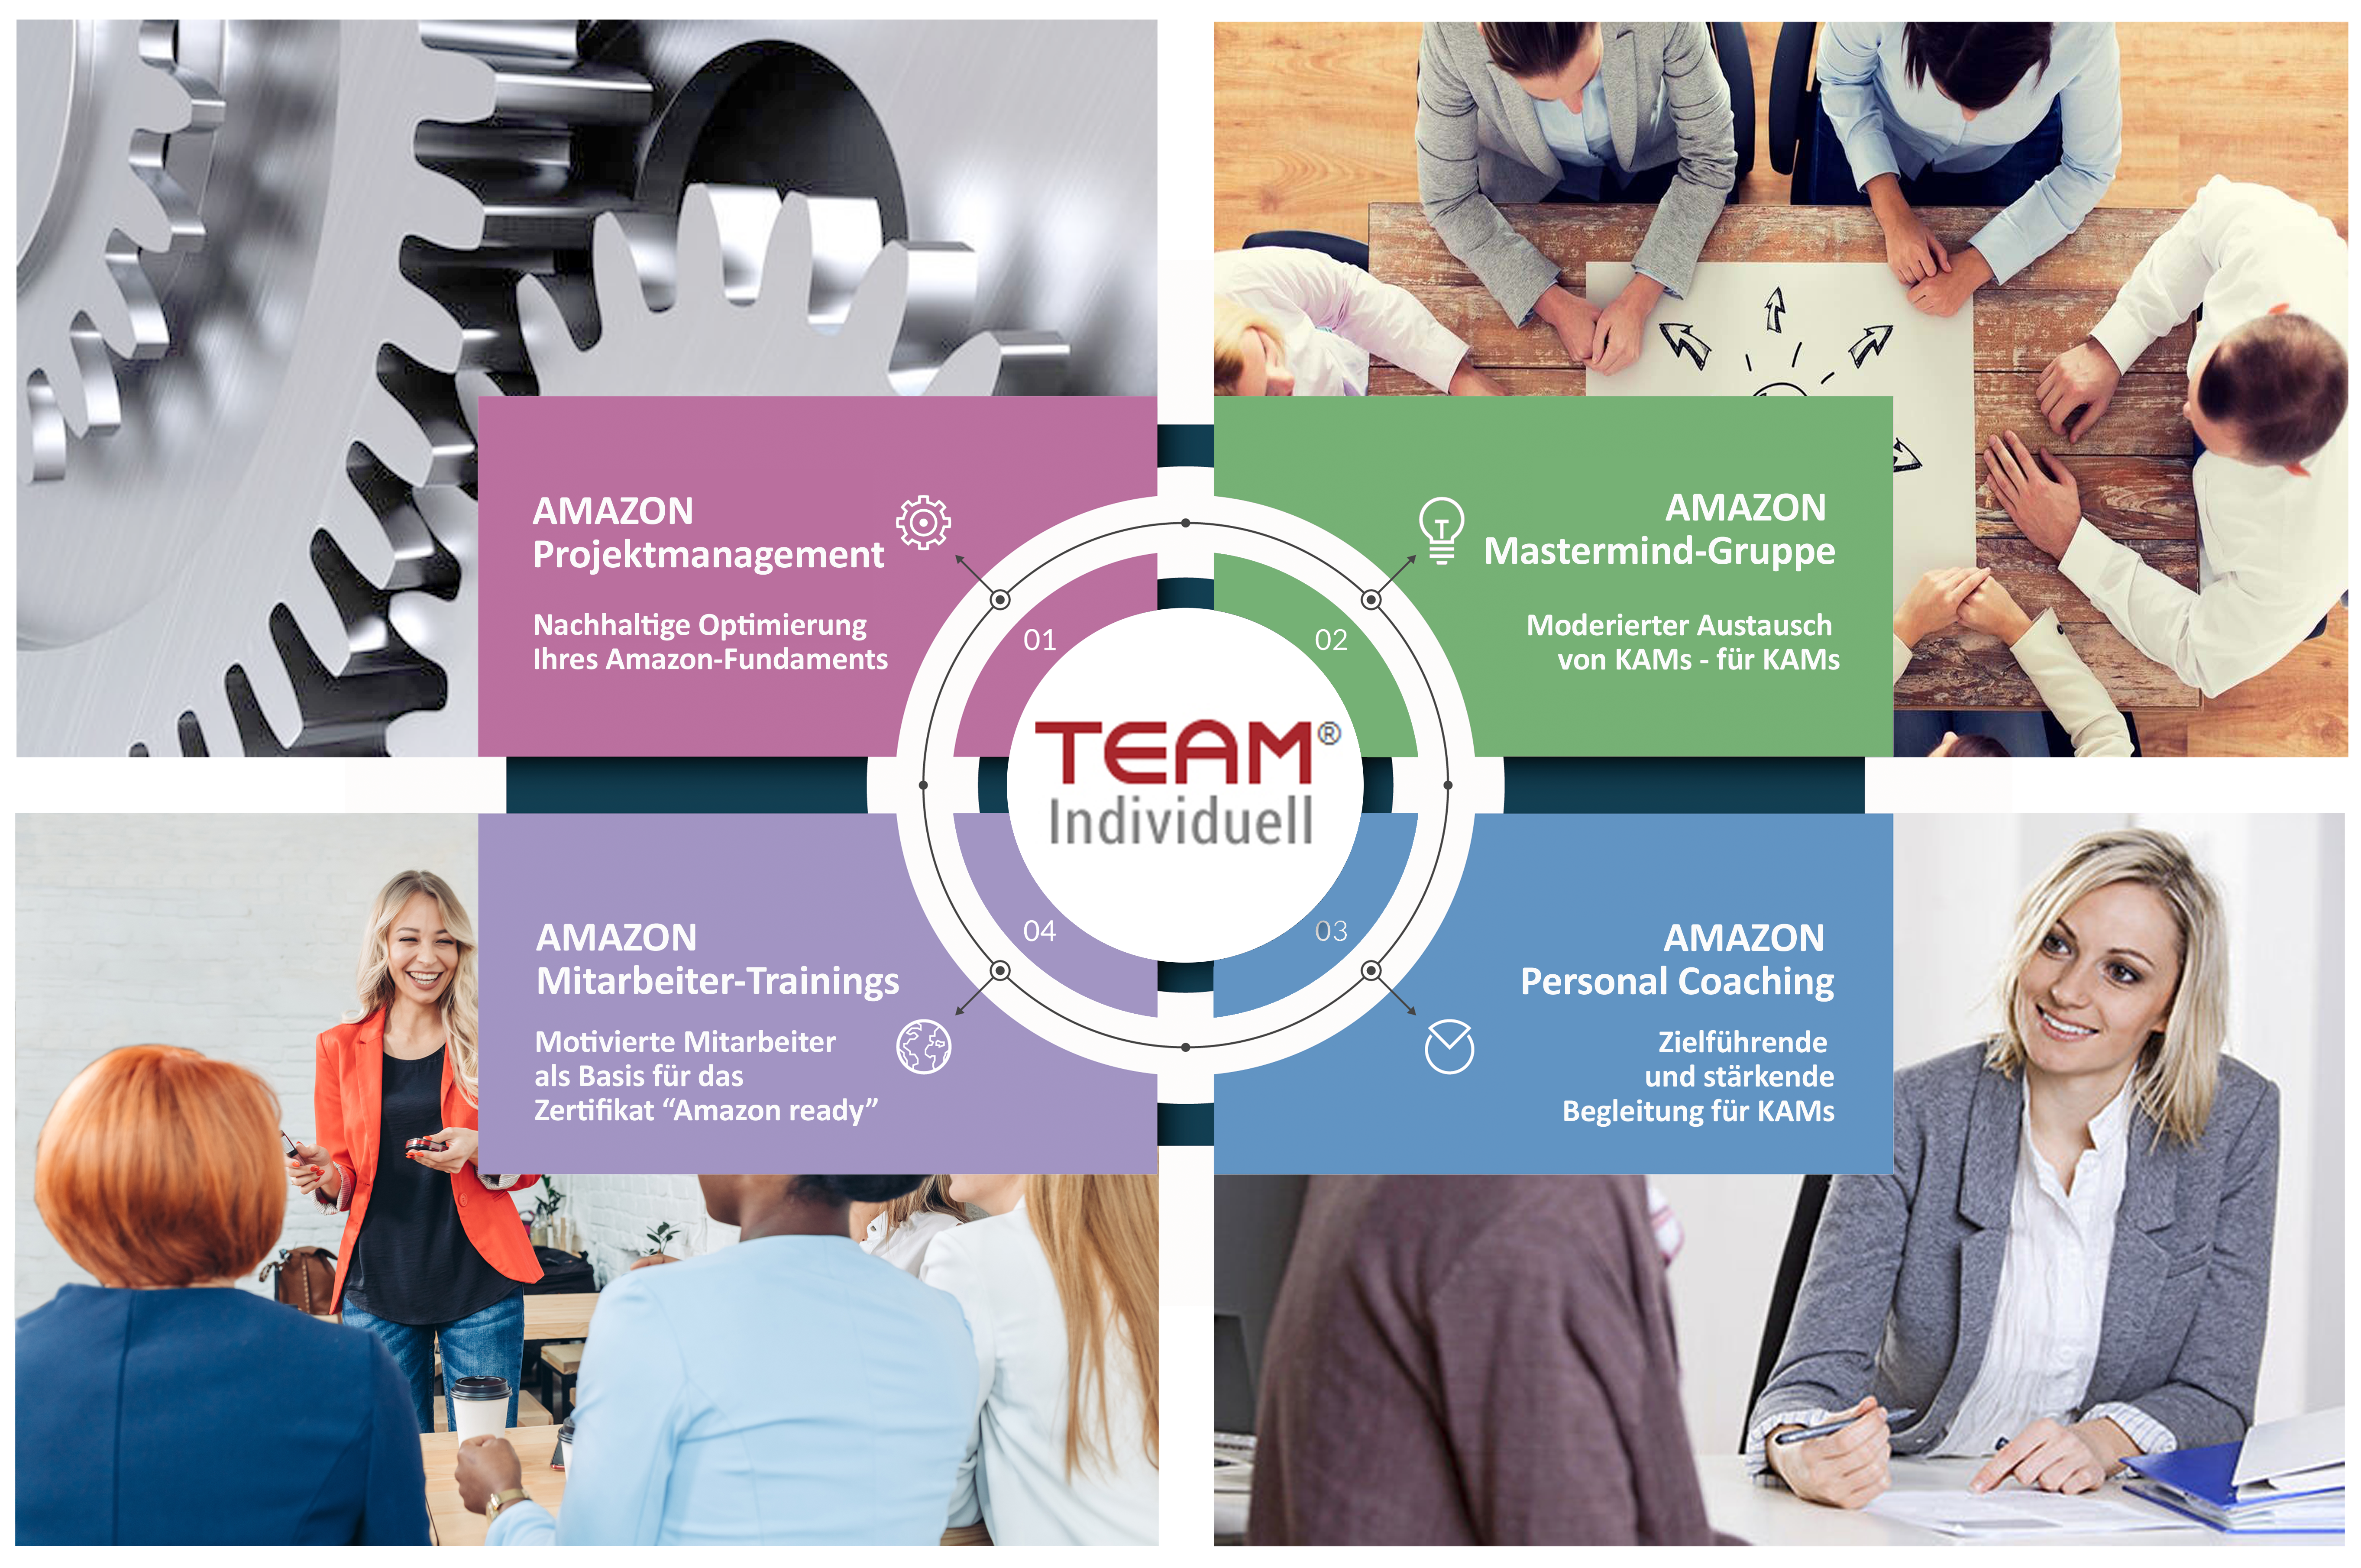 Das Guiding-Konzept besteht aus diesen 4 Bereichen: Amazon Projektmanagement, Amazon Mastermind-Gruppe, Amazon-Trainings, Personal Coaching, KAM-Coaching